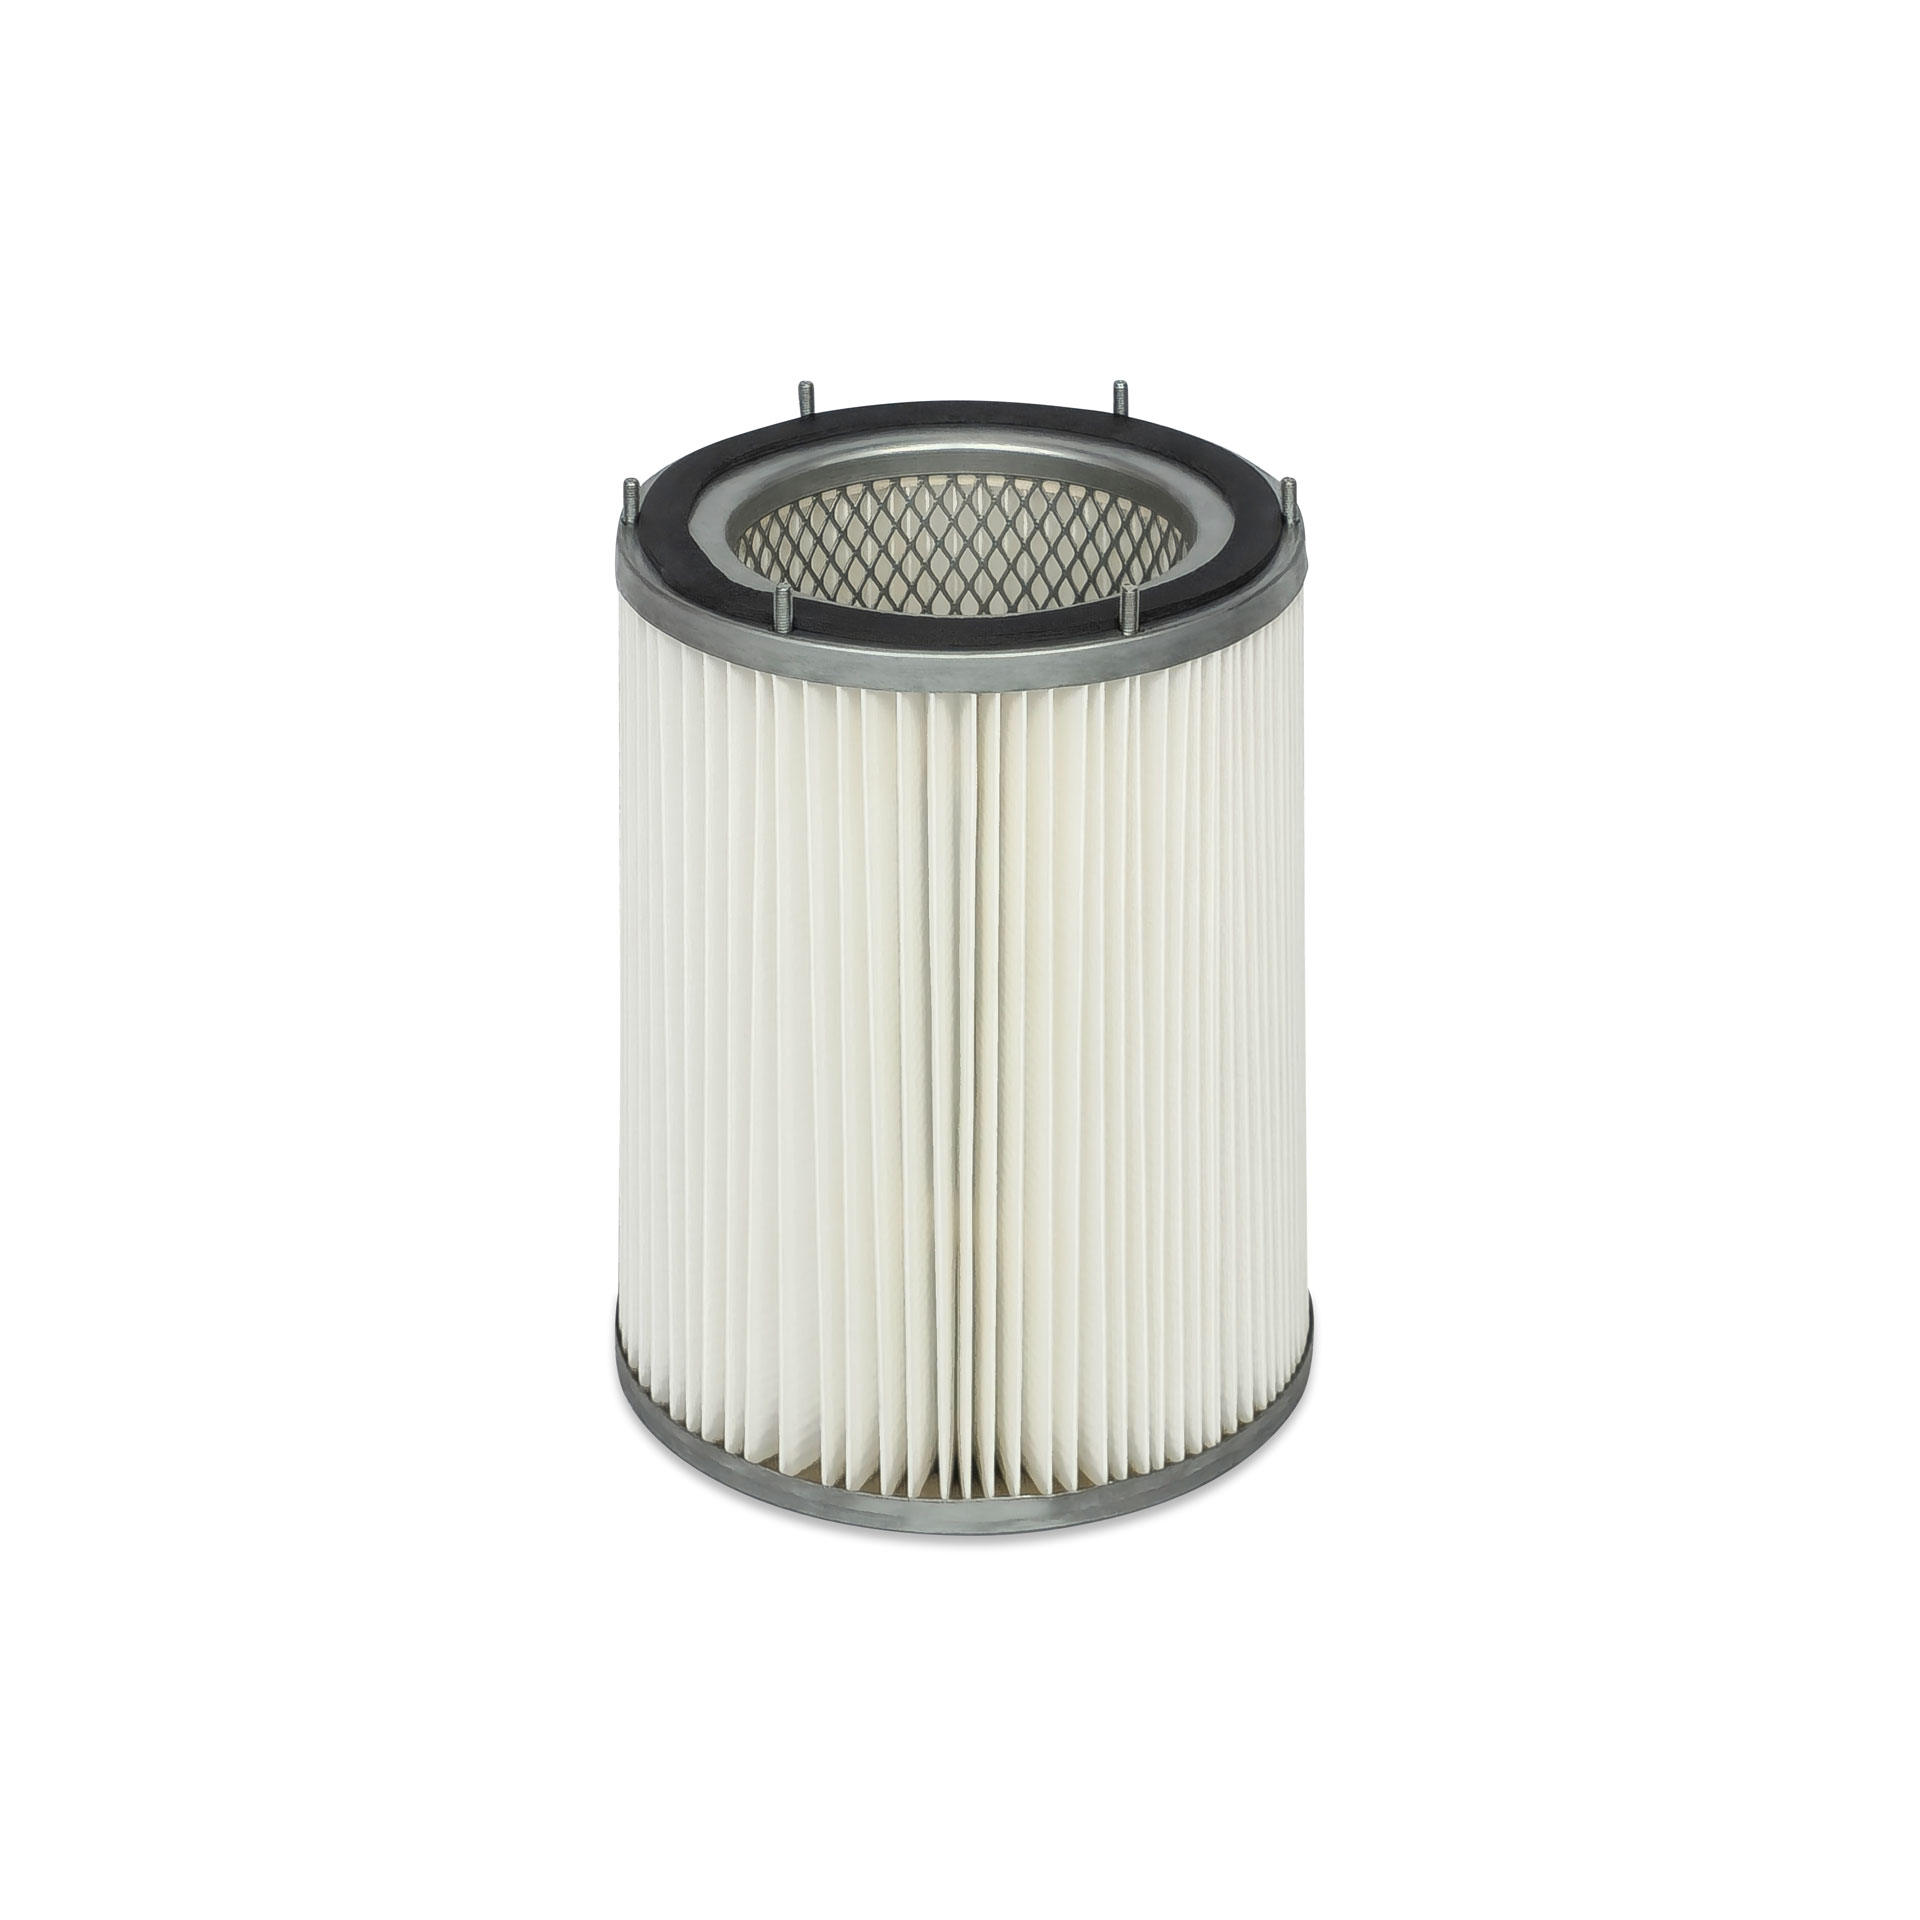 Filterpatrone - 218x315 mm - ePTFE Membran - 1,35 m² für KEMPER Dusty Evo